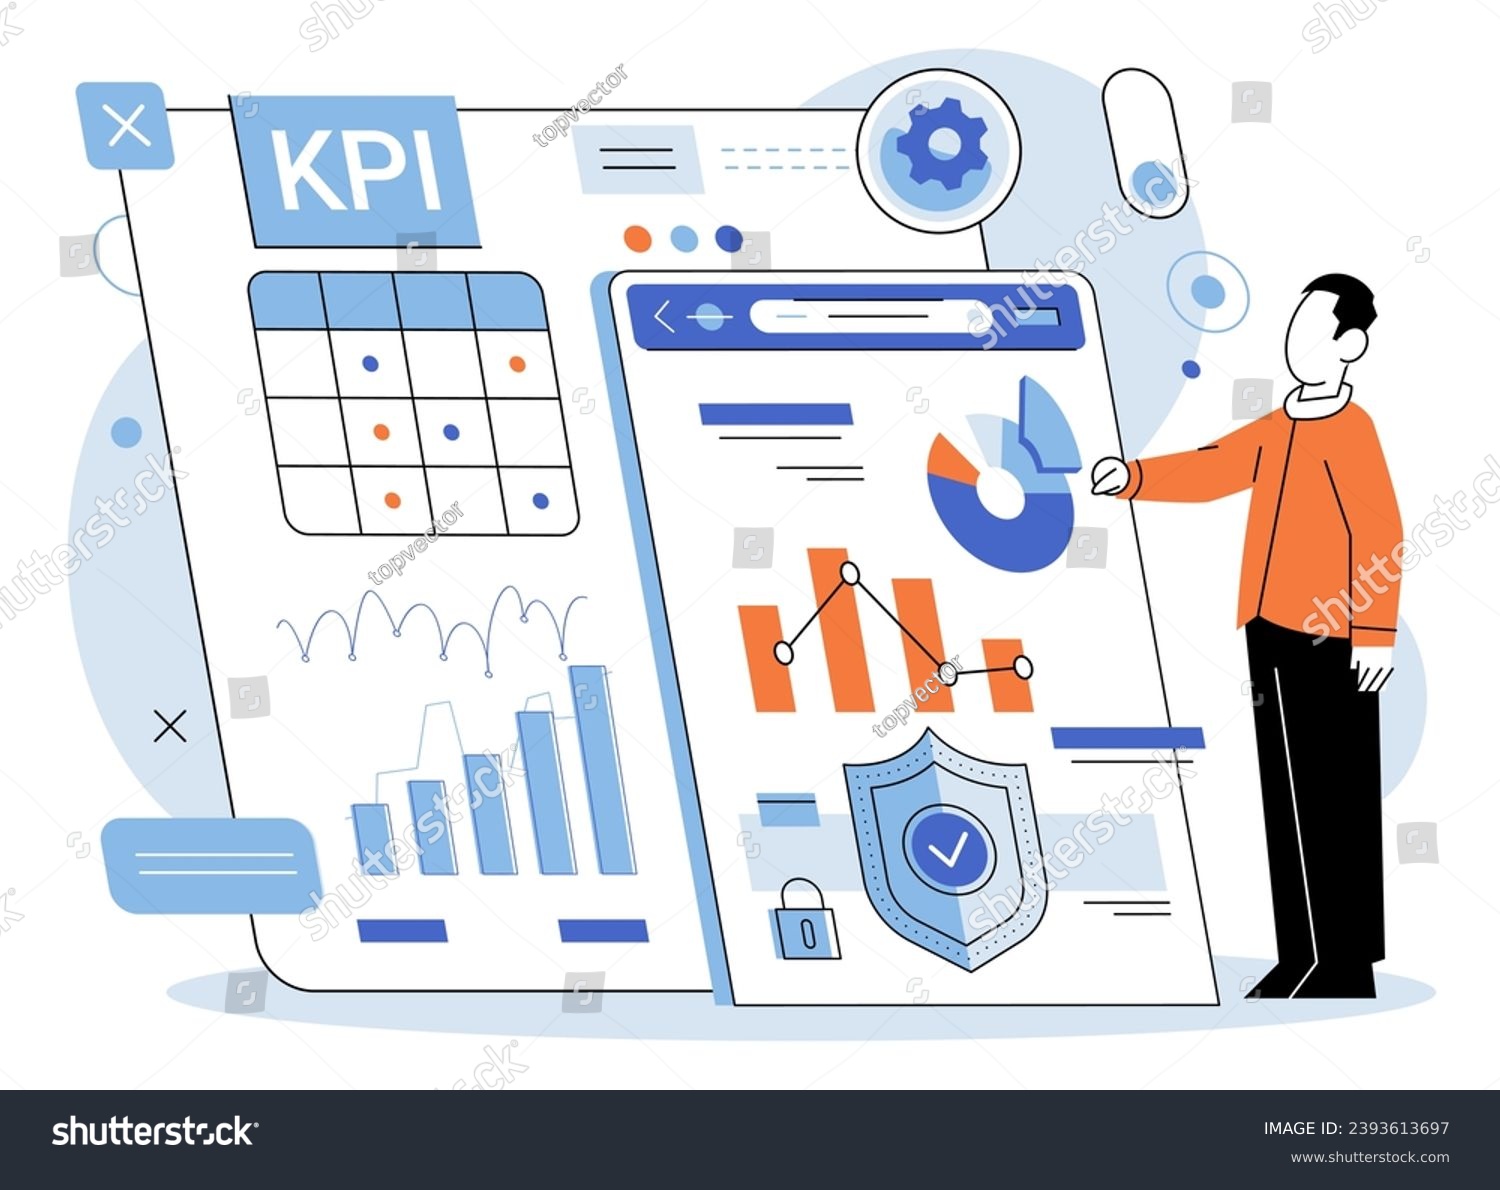 KPI key performance indicator. Vector illustration. Business plans should align with key performance indicators System optimization involves tweaking various performance indicators A KPI report #2393613697